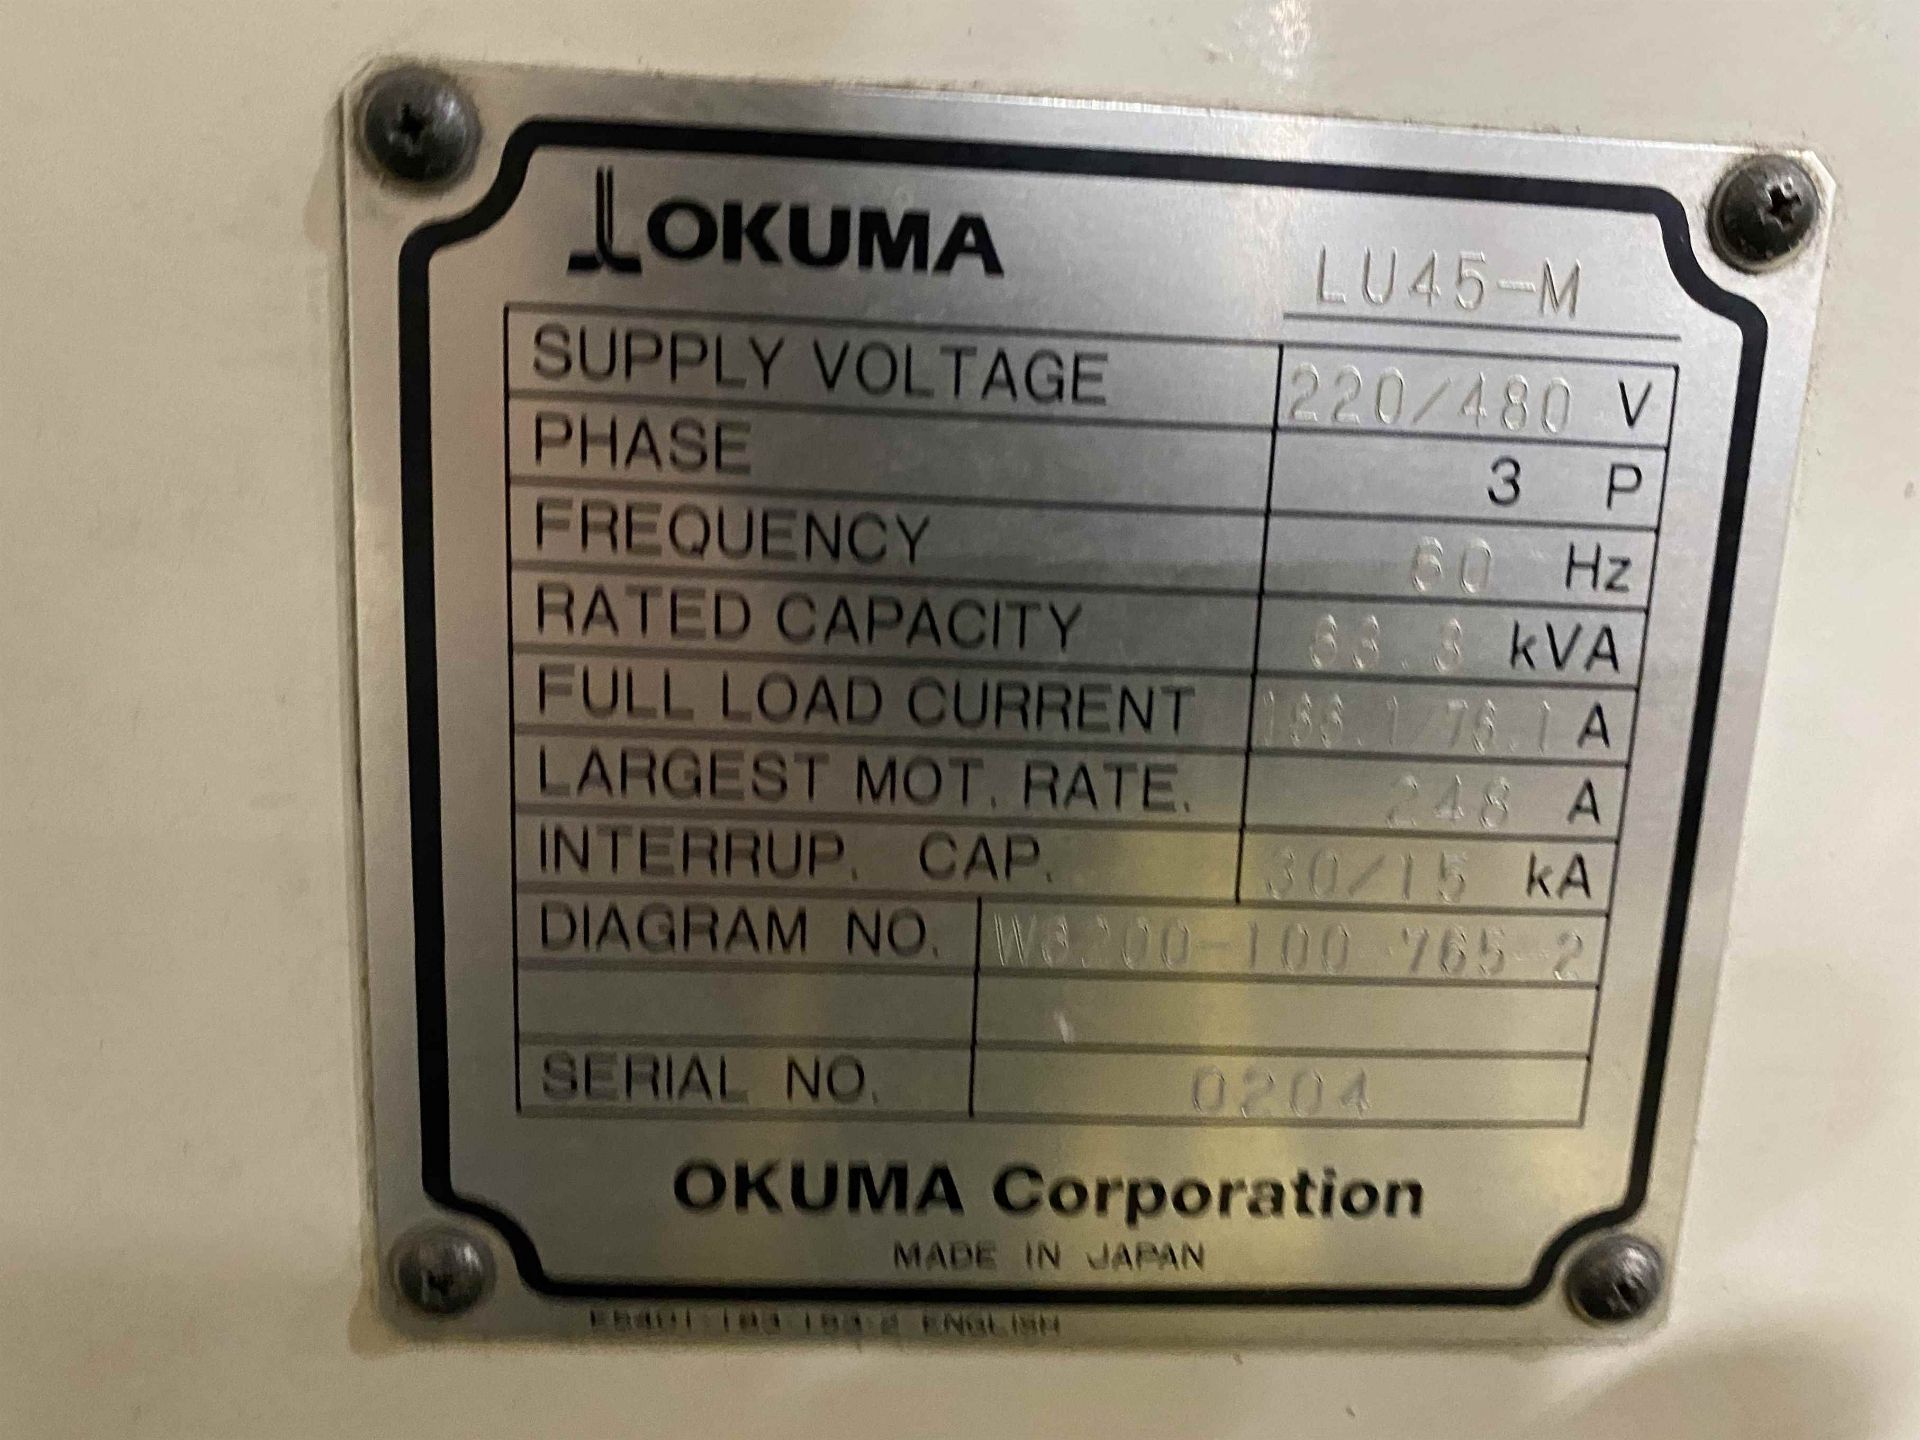 OKUMA IMPACT LU45-M Turning Center, s/n 0204, w/ OSP-U100 Control, 33.07" Swing Over Covers, 118.11" - Image 9 of 9